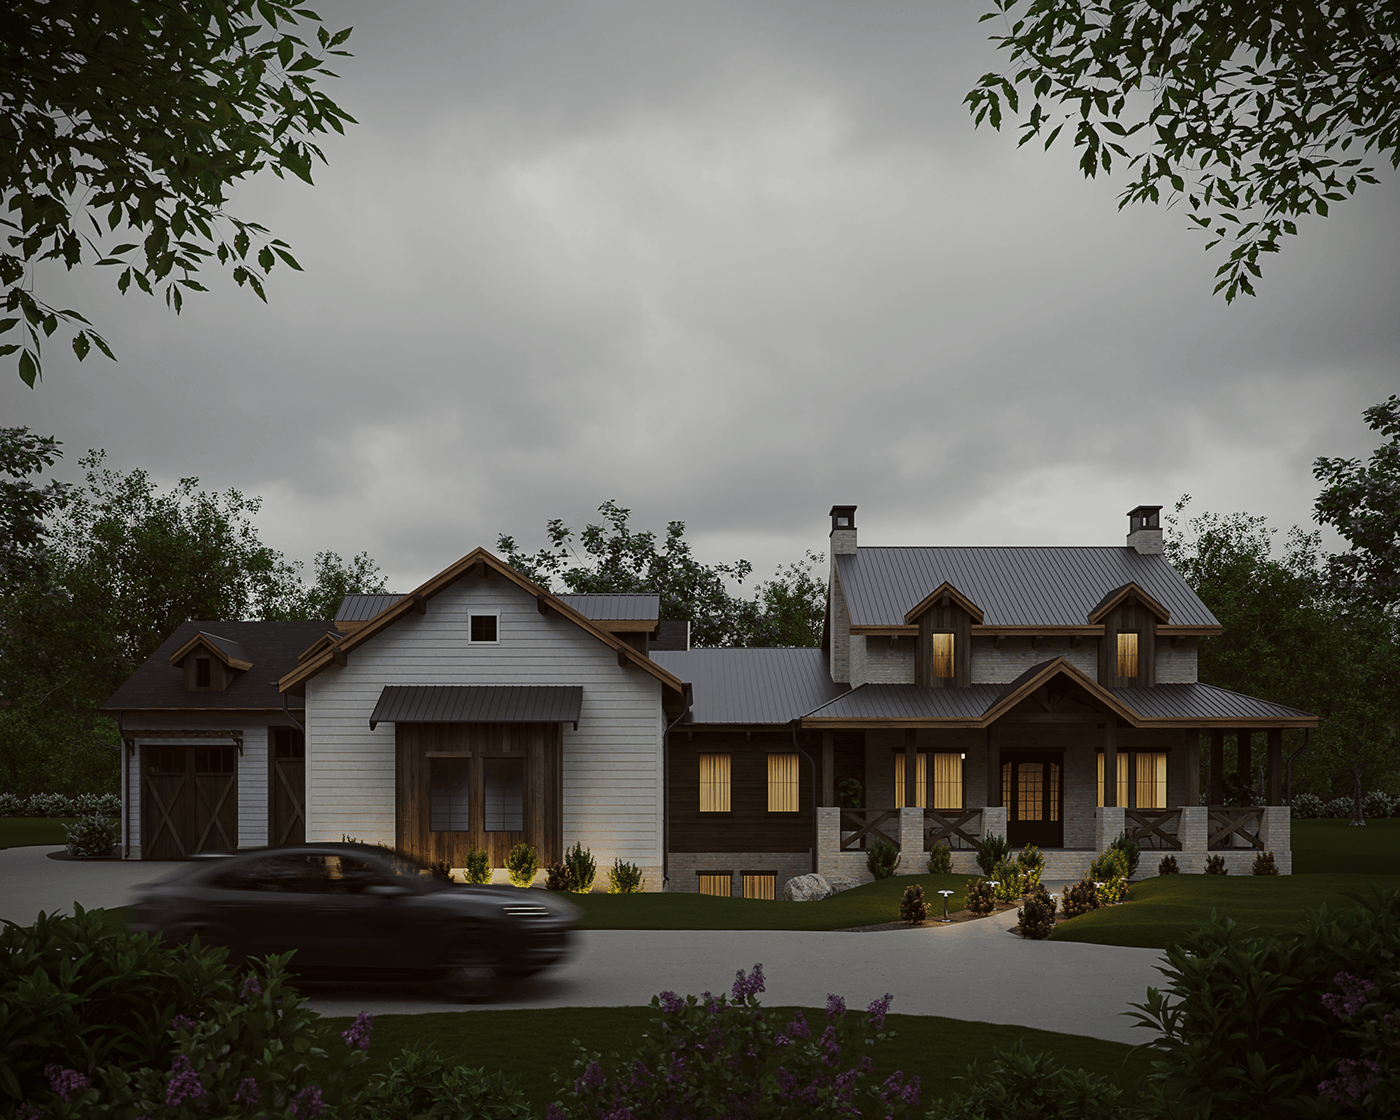 Farmhouse visualization corona CGI archviz exterior architecture Render 3D